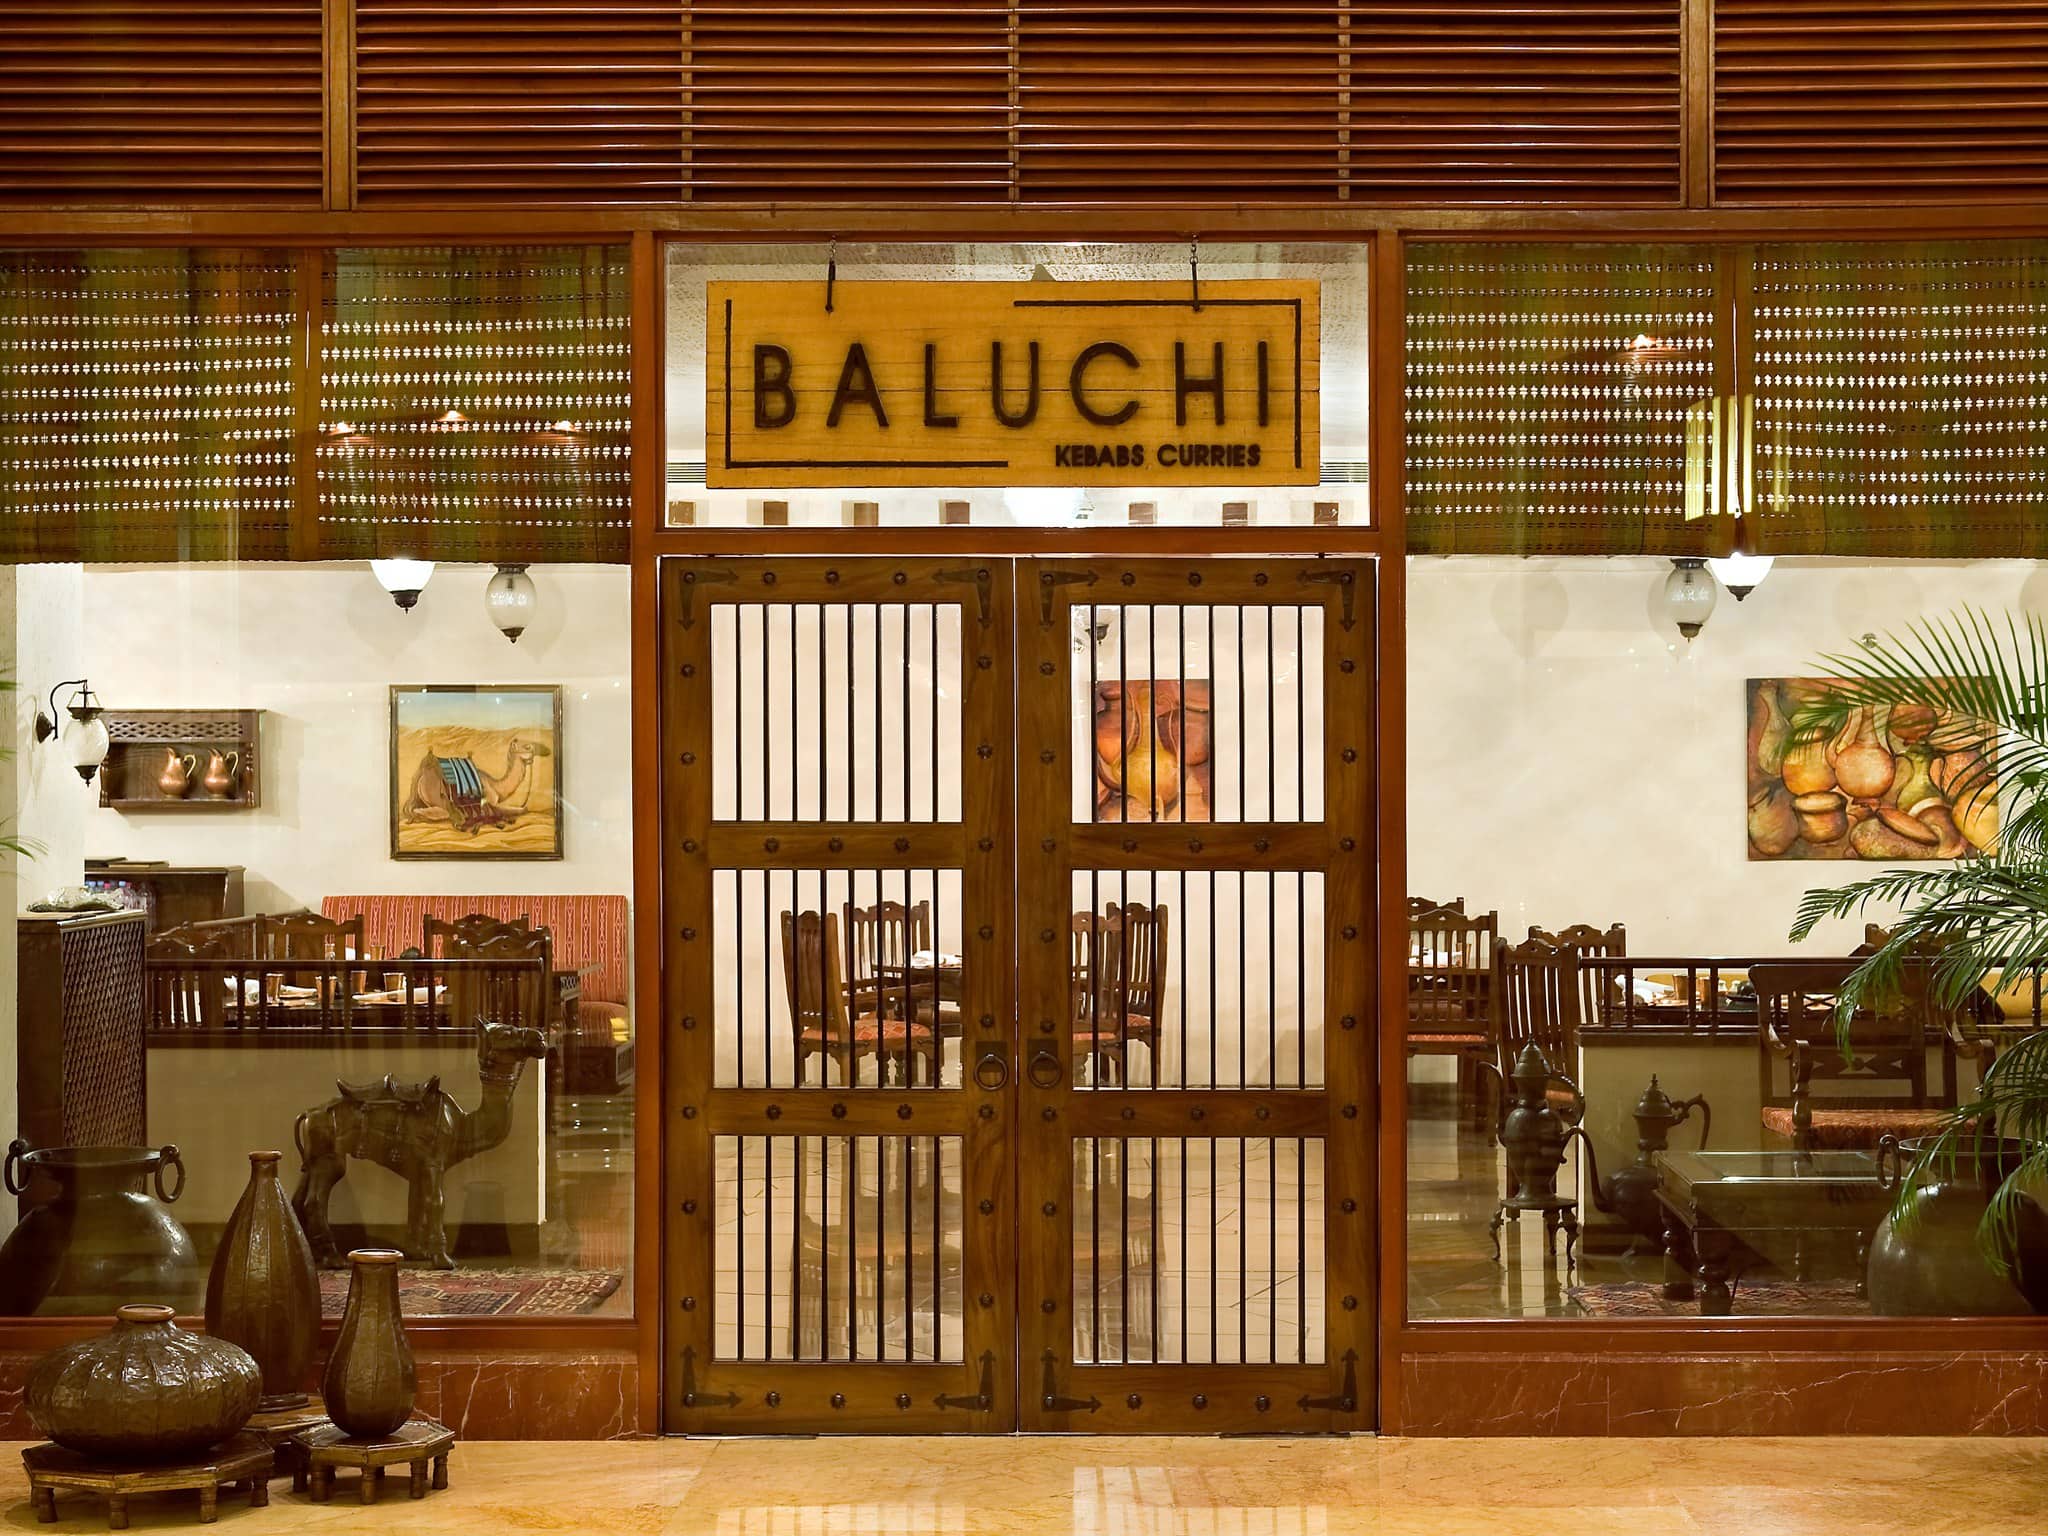 Baluchi - The Lalit Mumbai, Chakala, Mumbai